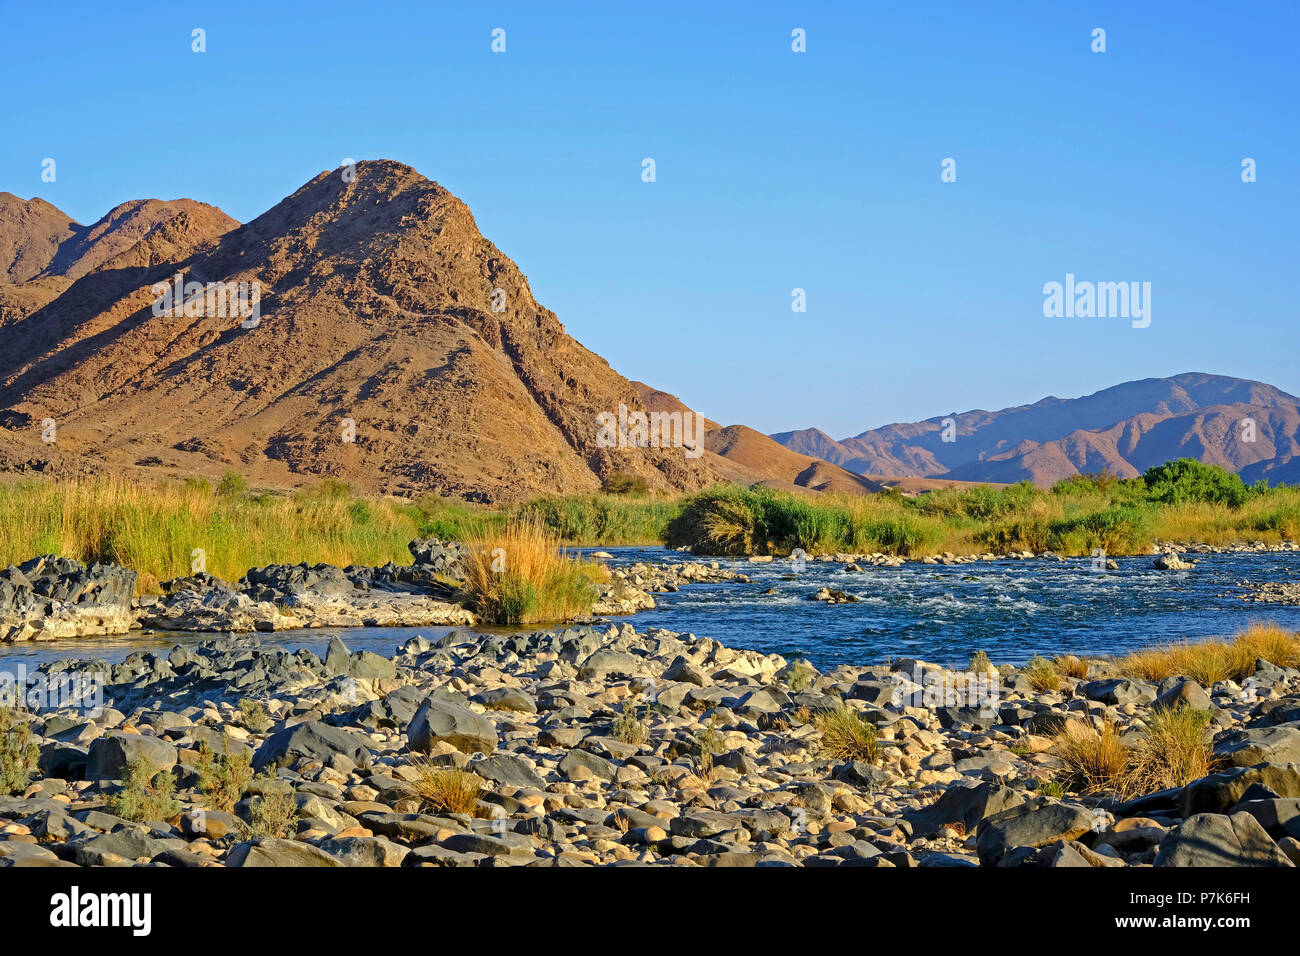 stony river bed of the Orange River / Oranjerivier (border river) in Richtersveld, opposite side of Namibia, Namaqua, South Africa Stock Photo